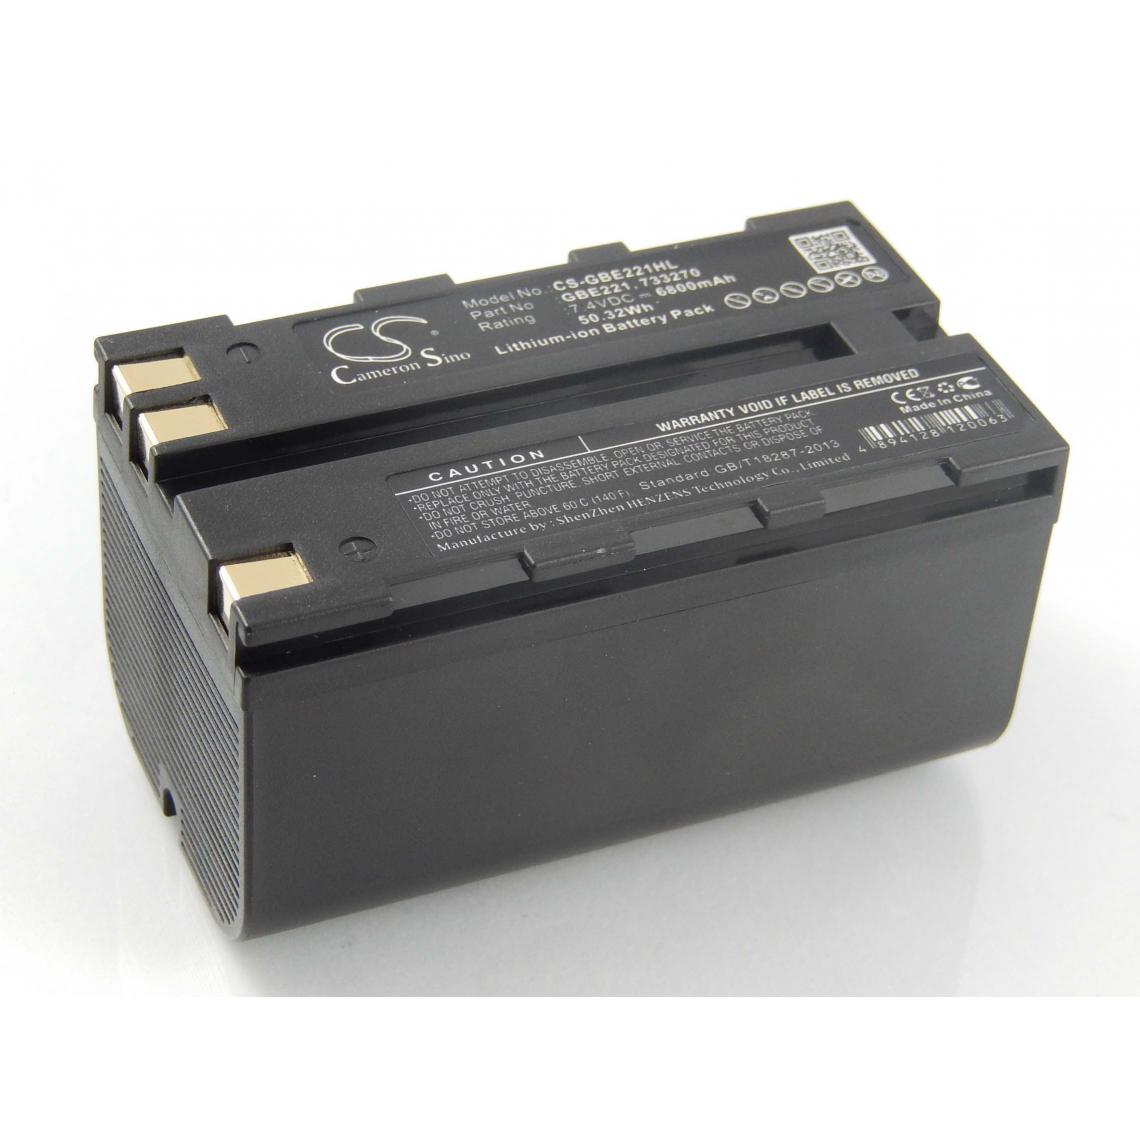 Vhbw - vhbw Batterie compatible avec Leica ATX1200, ATX1230, ATX900 dispositif de mesure laser, outil de mesure (6800mAh, 7,4V, Li-ion) - Piles rechargeables